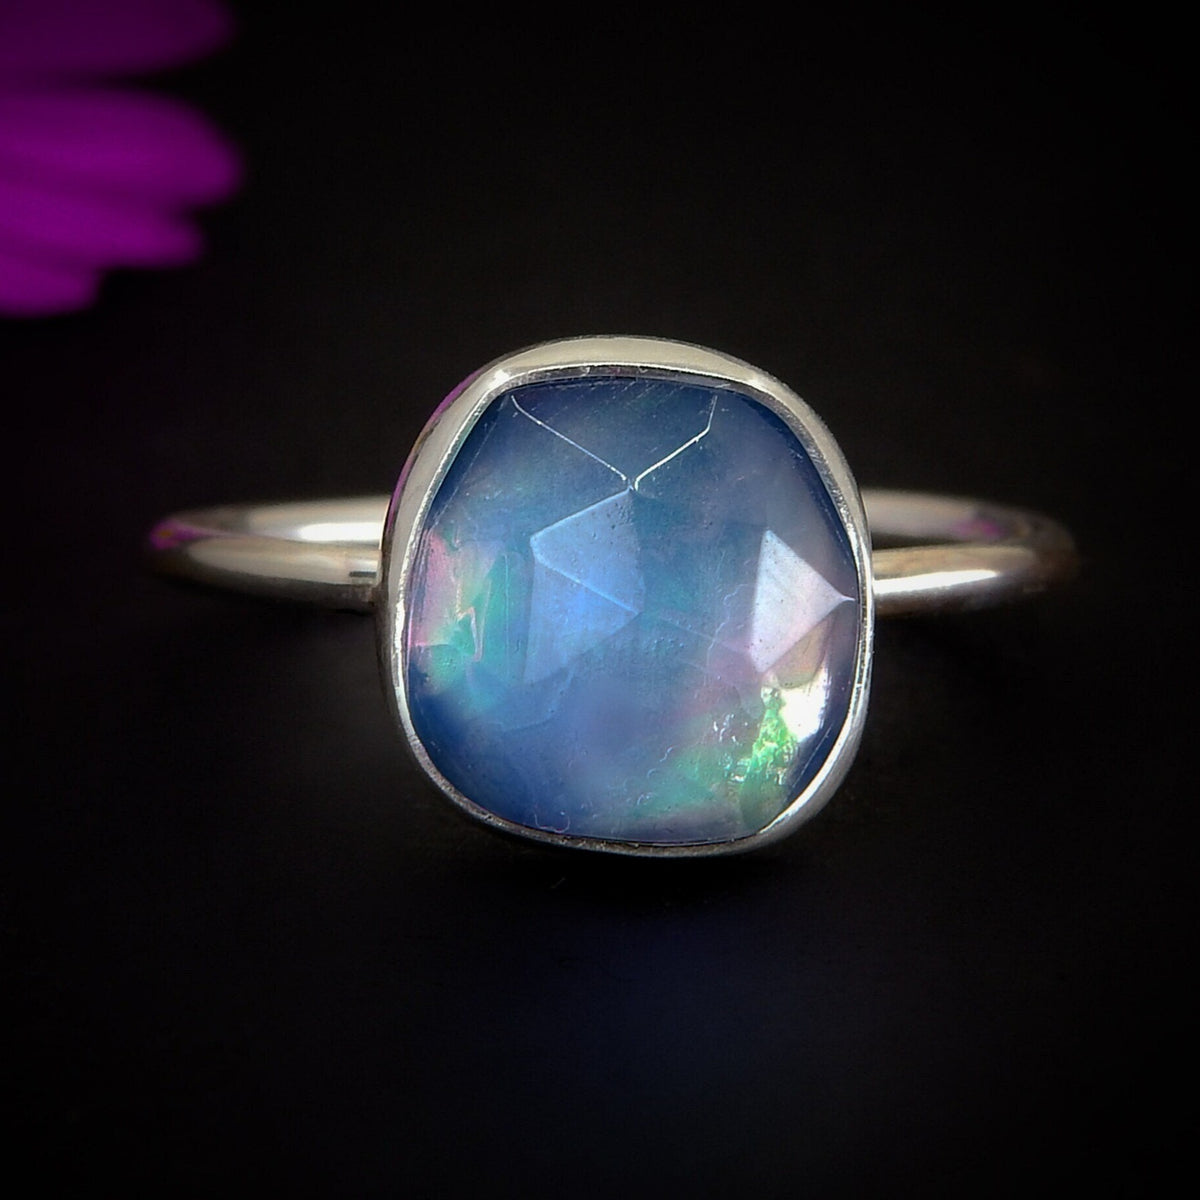 Rose Cut Clear Quartz & Aurora Opal Ring - Size 9 - Sterling Silver - Rainbow Opal Jewelry, Dainty Aurora Opal - Faceted Rainbow Crystal